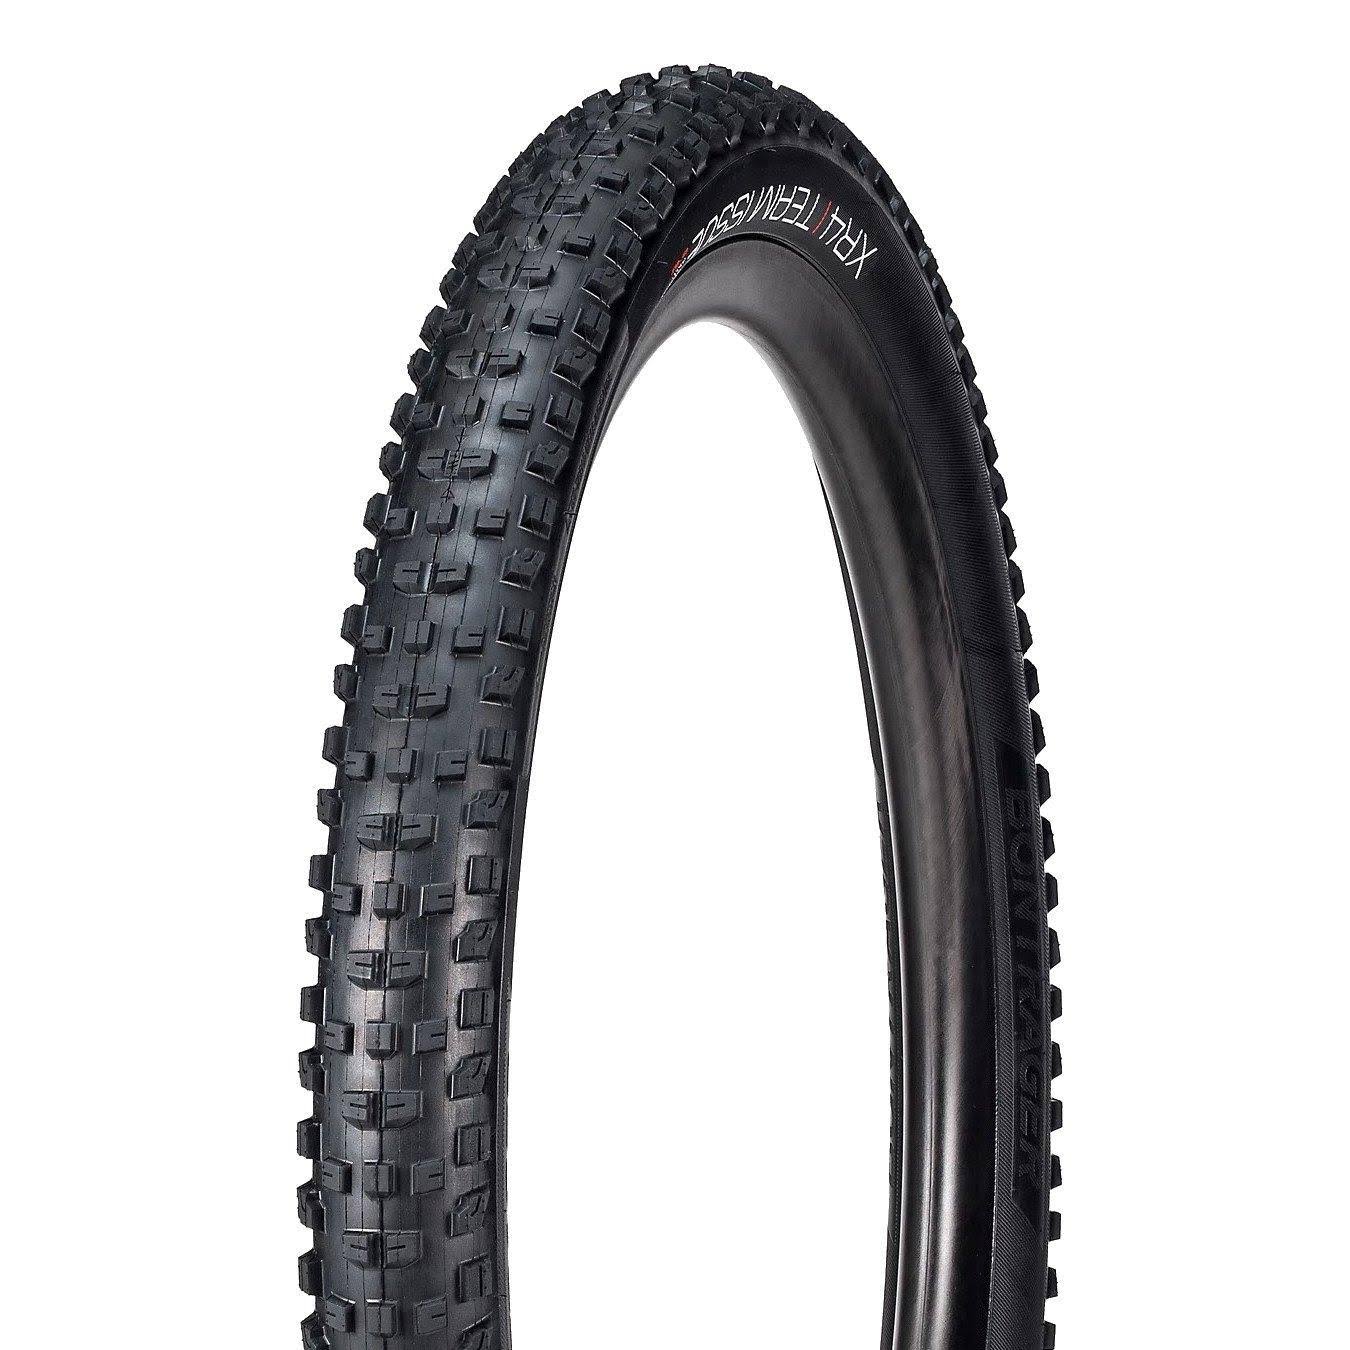 Bontrager XR4 Team Issue TLR MTB Tire 27.5-inch - Black - 27.5 x 2.80